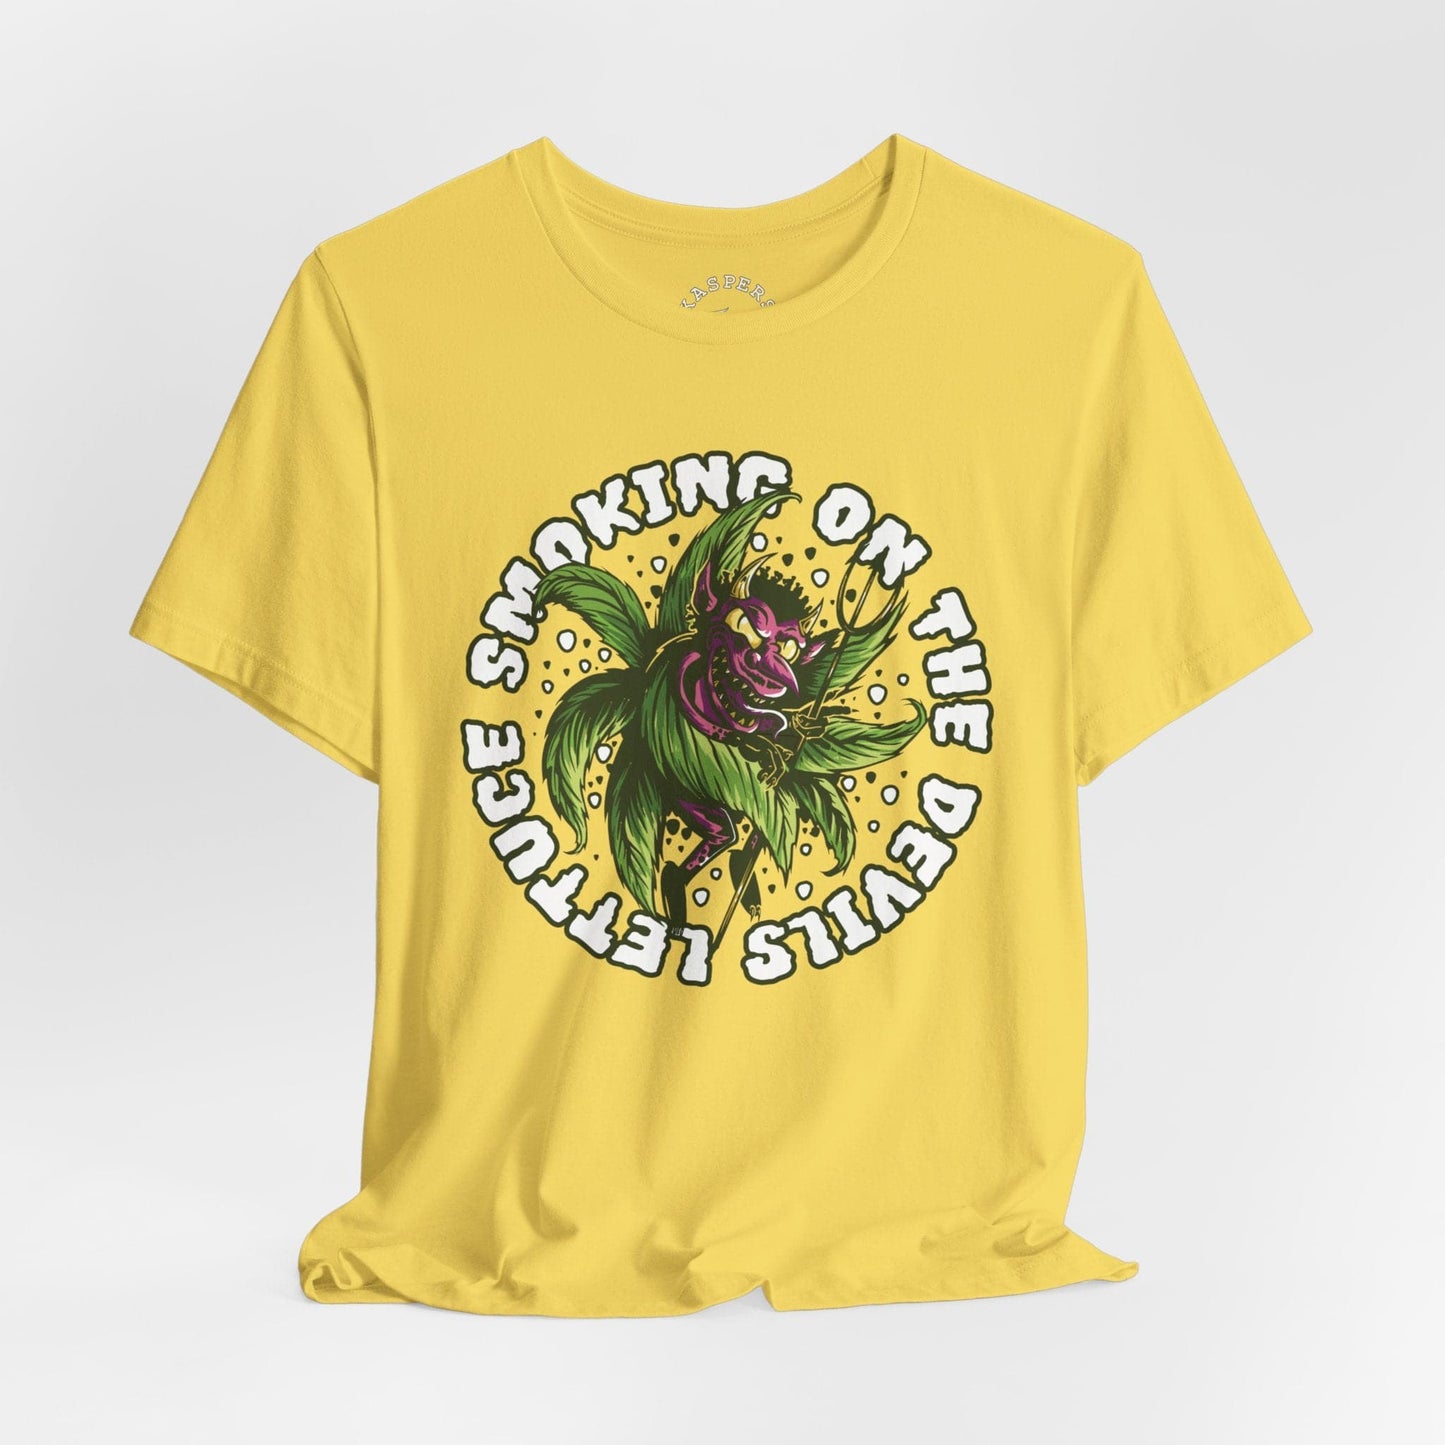 Smoking On The Devils Lettuce T-Shirt